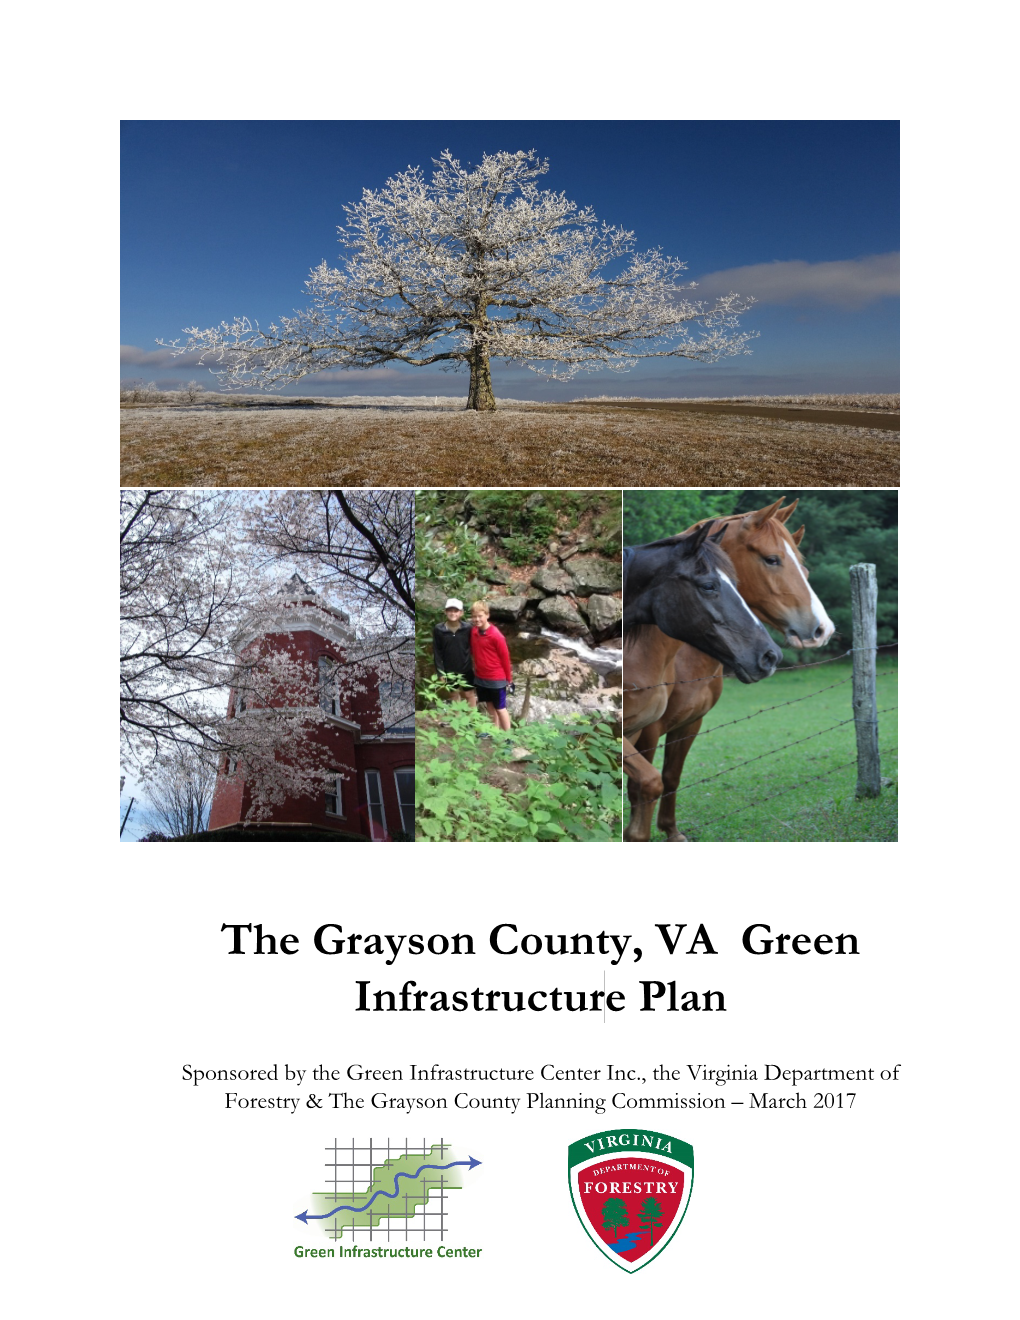 Grayson County, VA Green